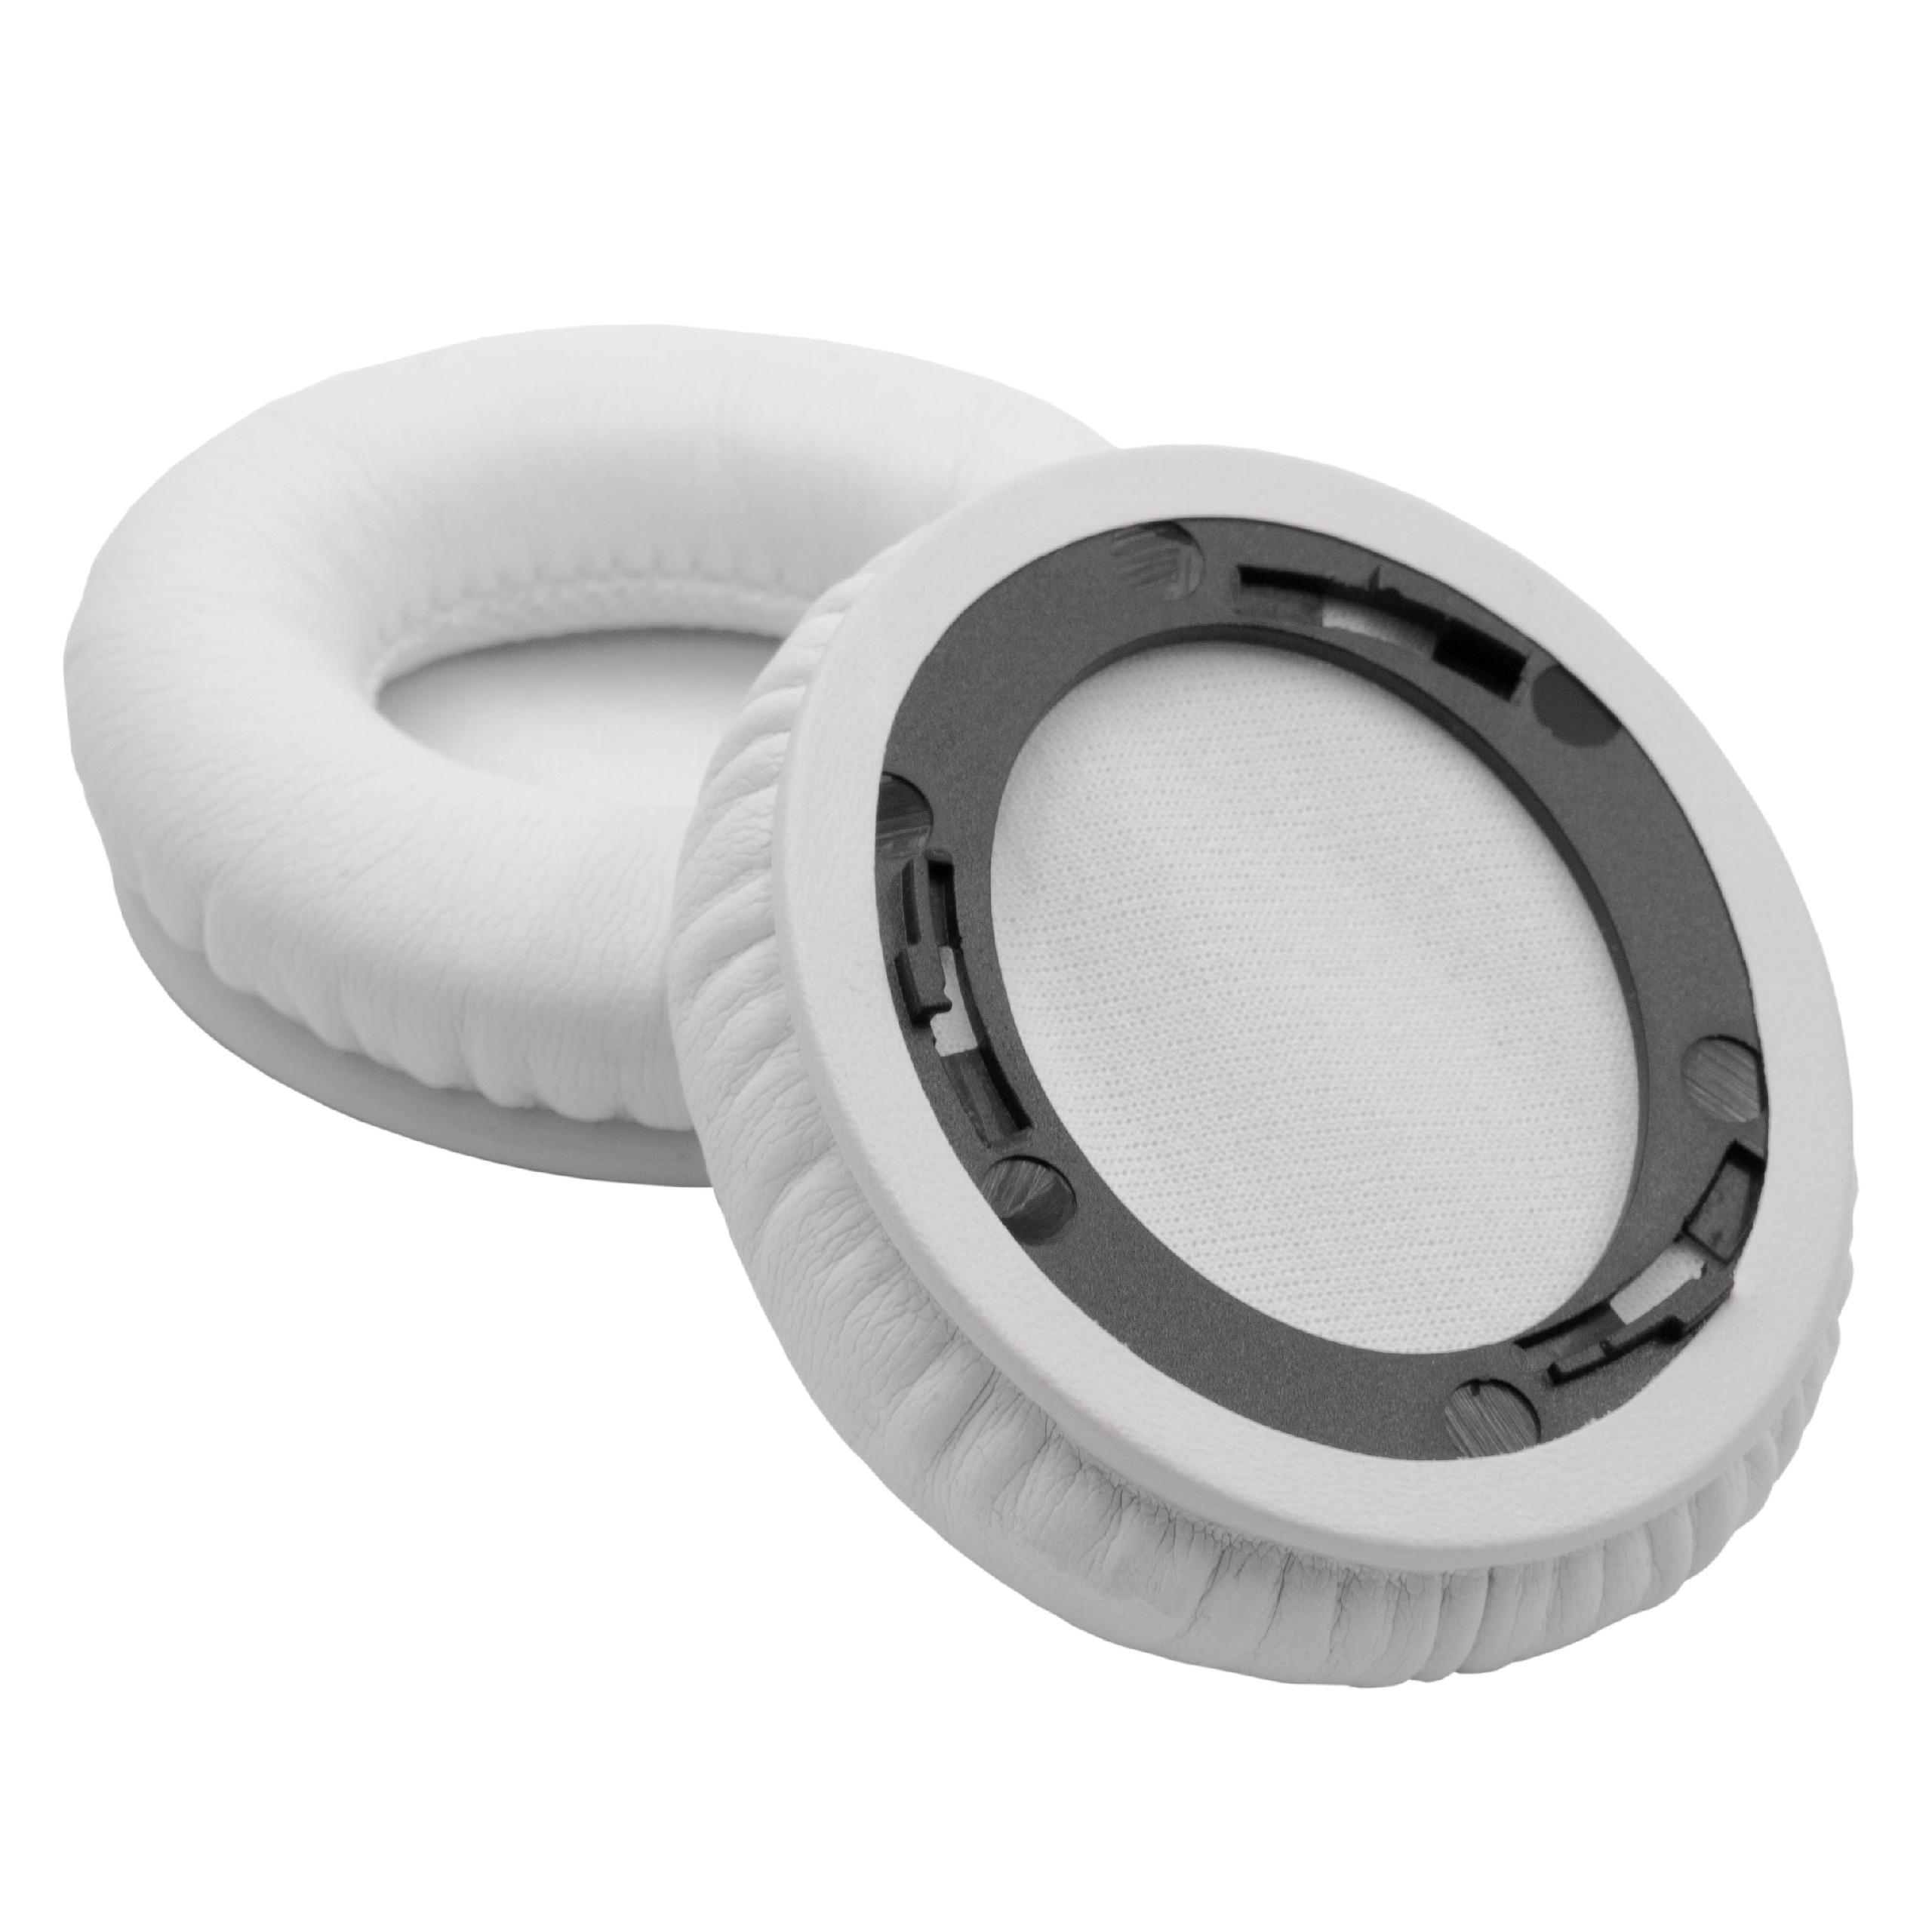 Ohrenpolster passend für Beats by Dr. Dre Solo HD 1 Kopfhörer u.a. - Polyurethan / Schaumstoff, 6,1 x 5,2 cm, 